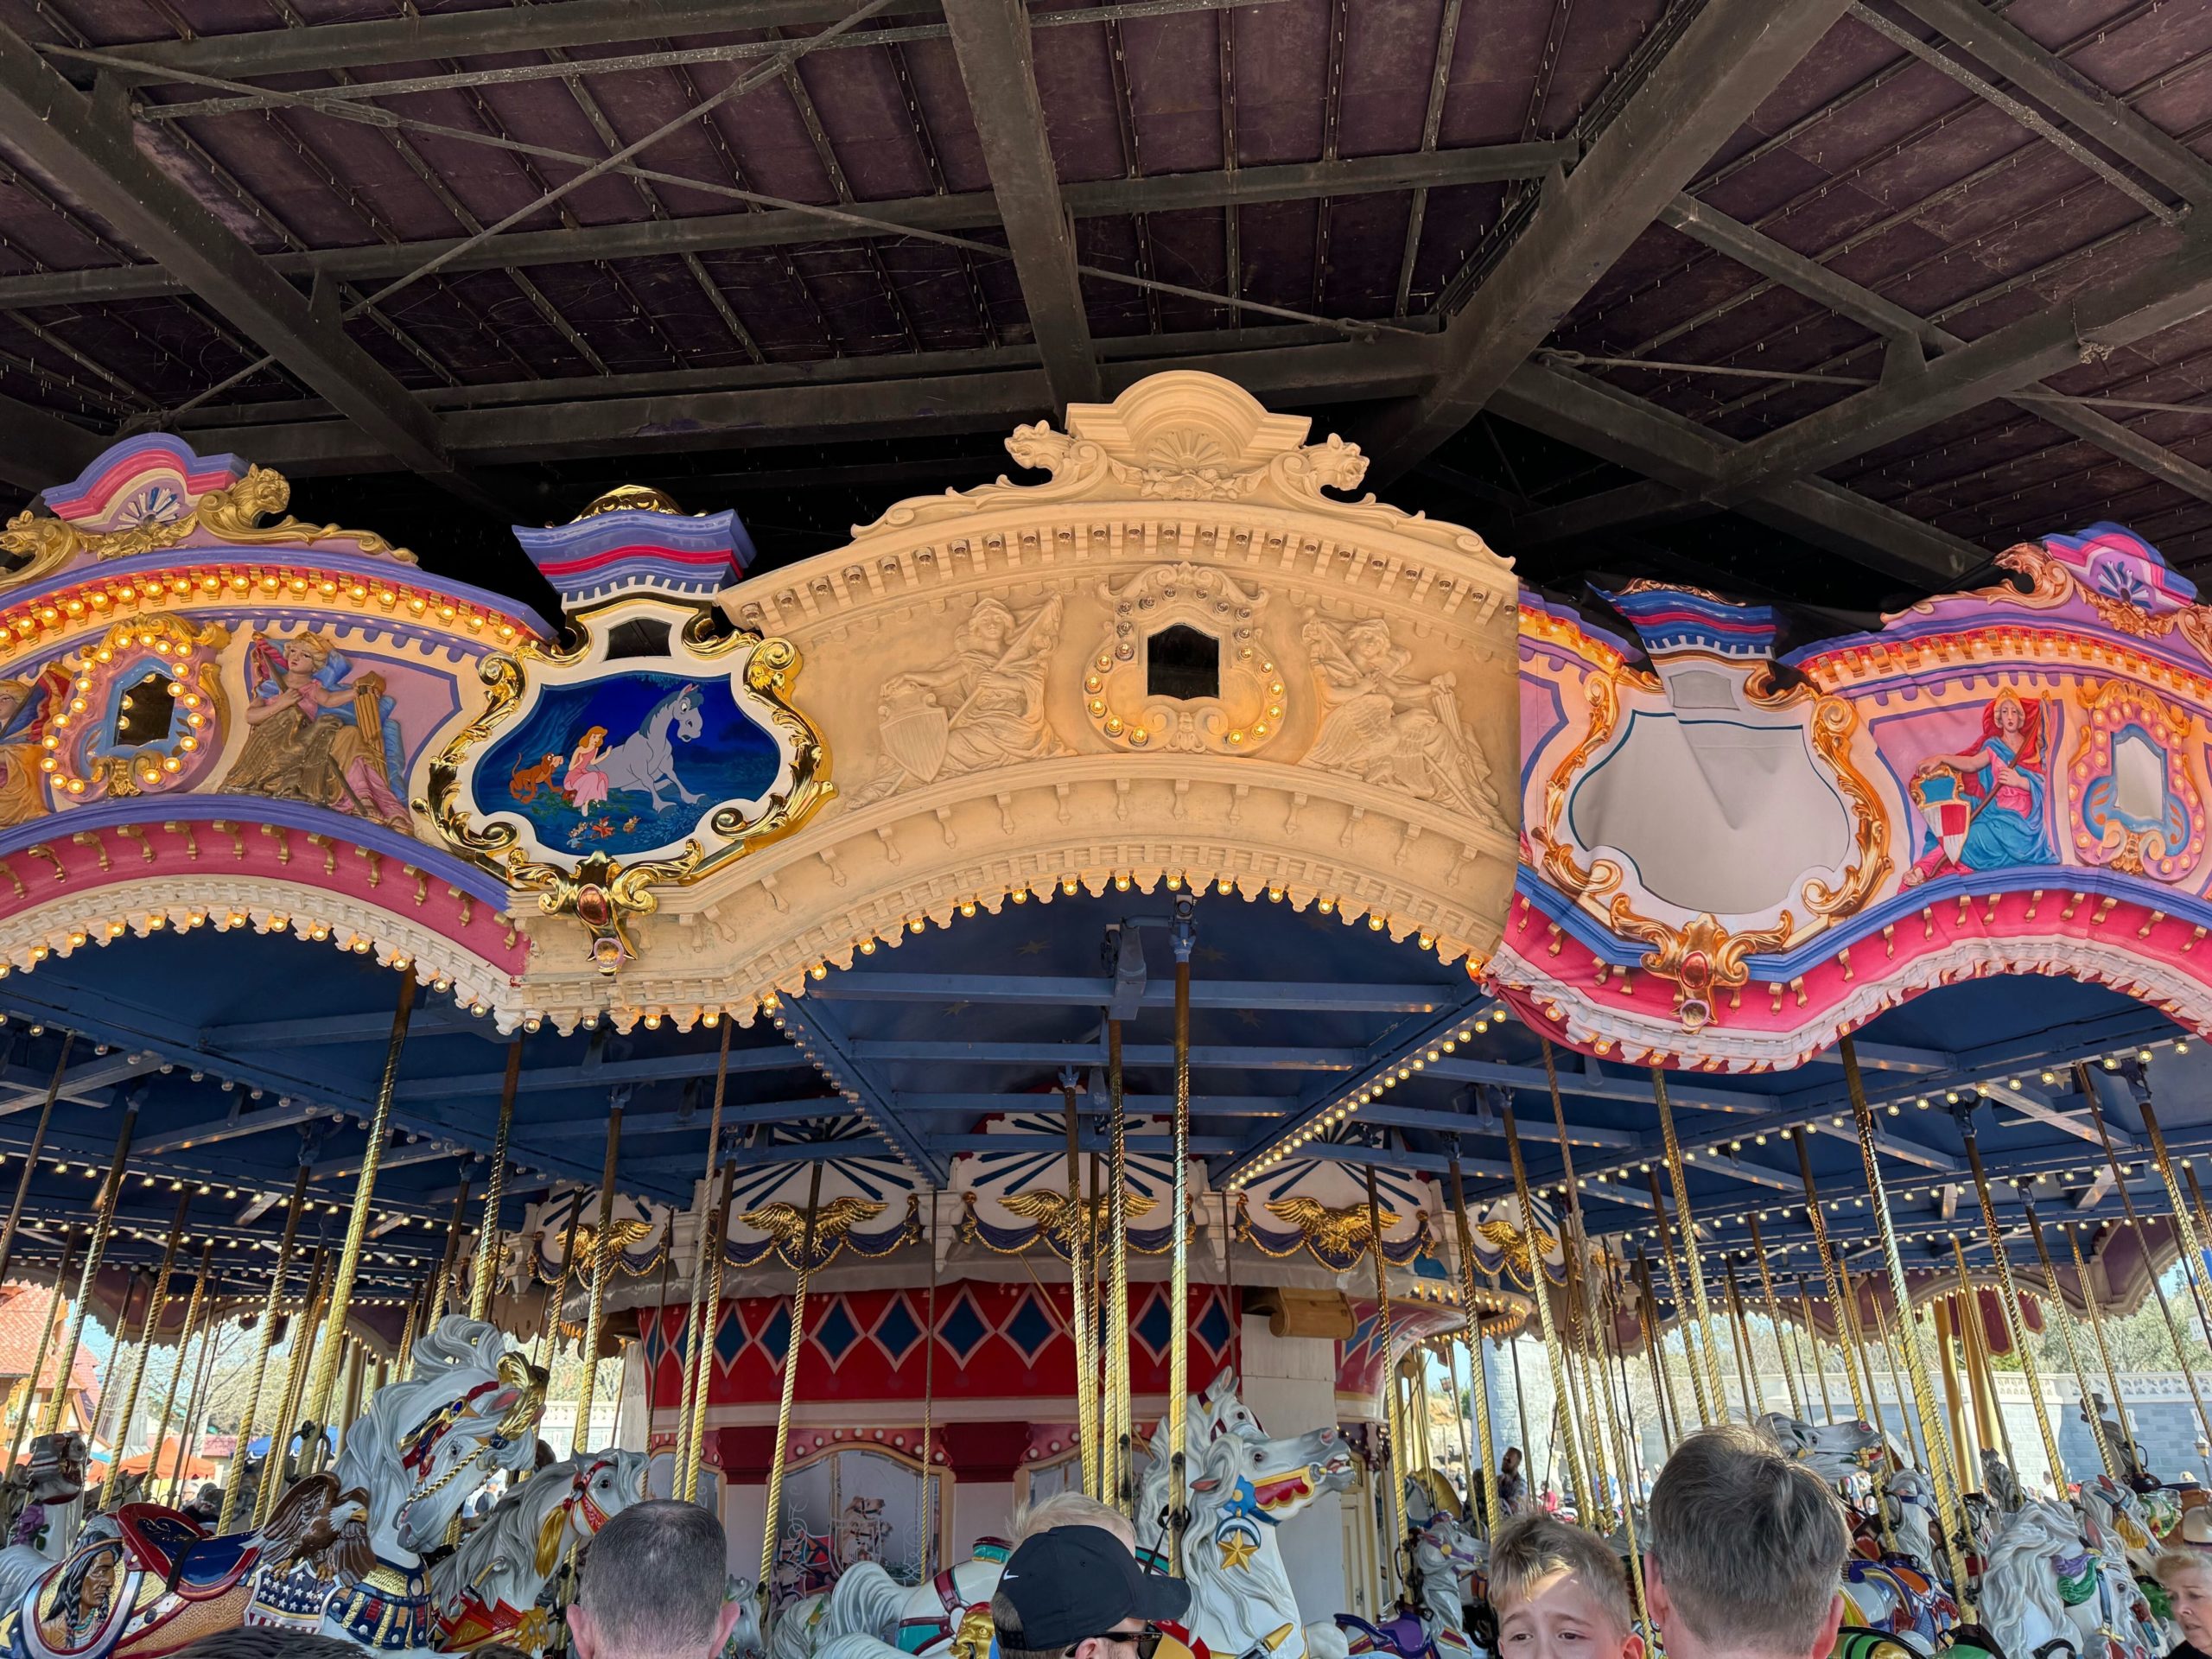 Prince Charming's Regal Carrousel in Magic Kingdom